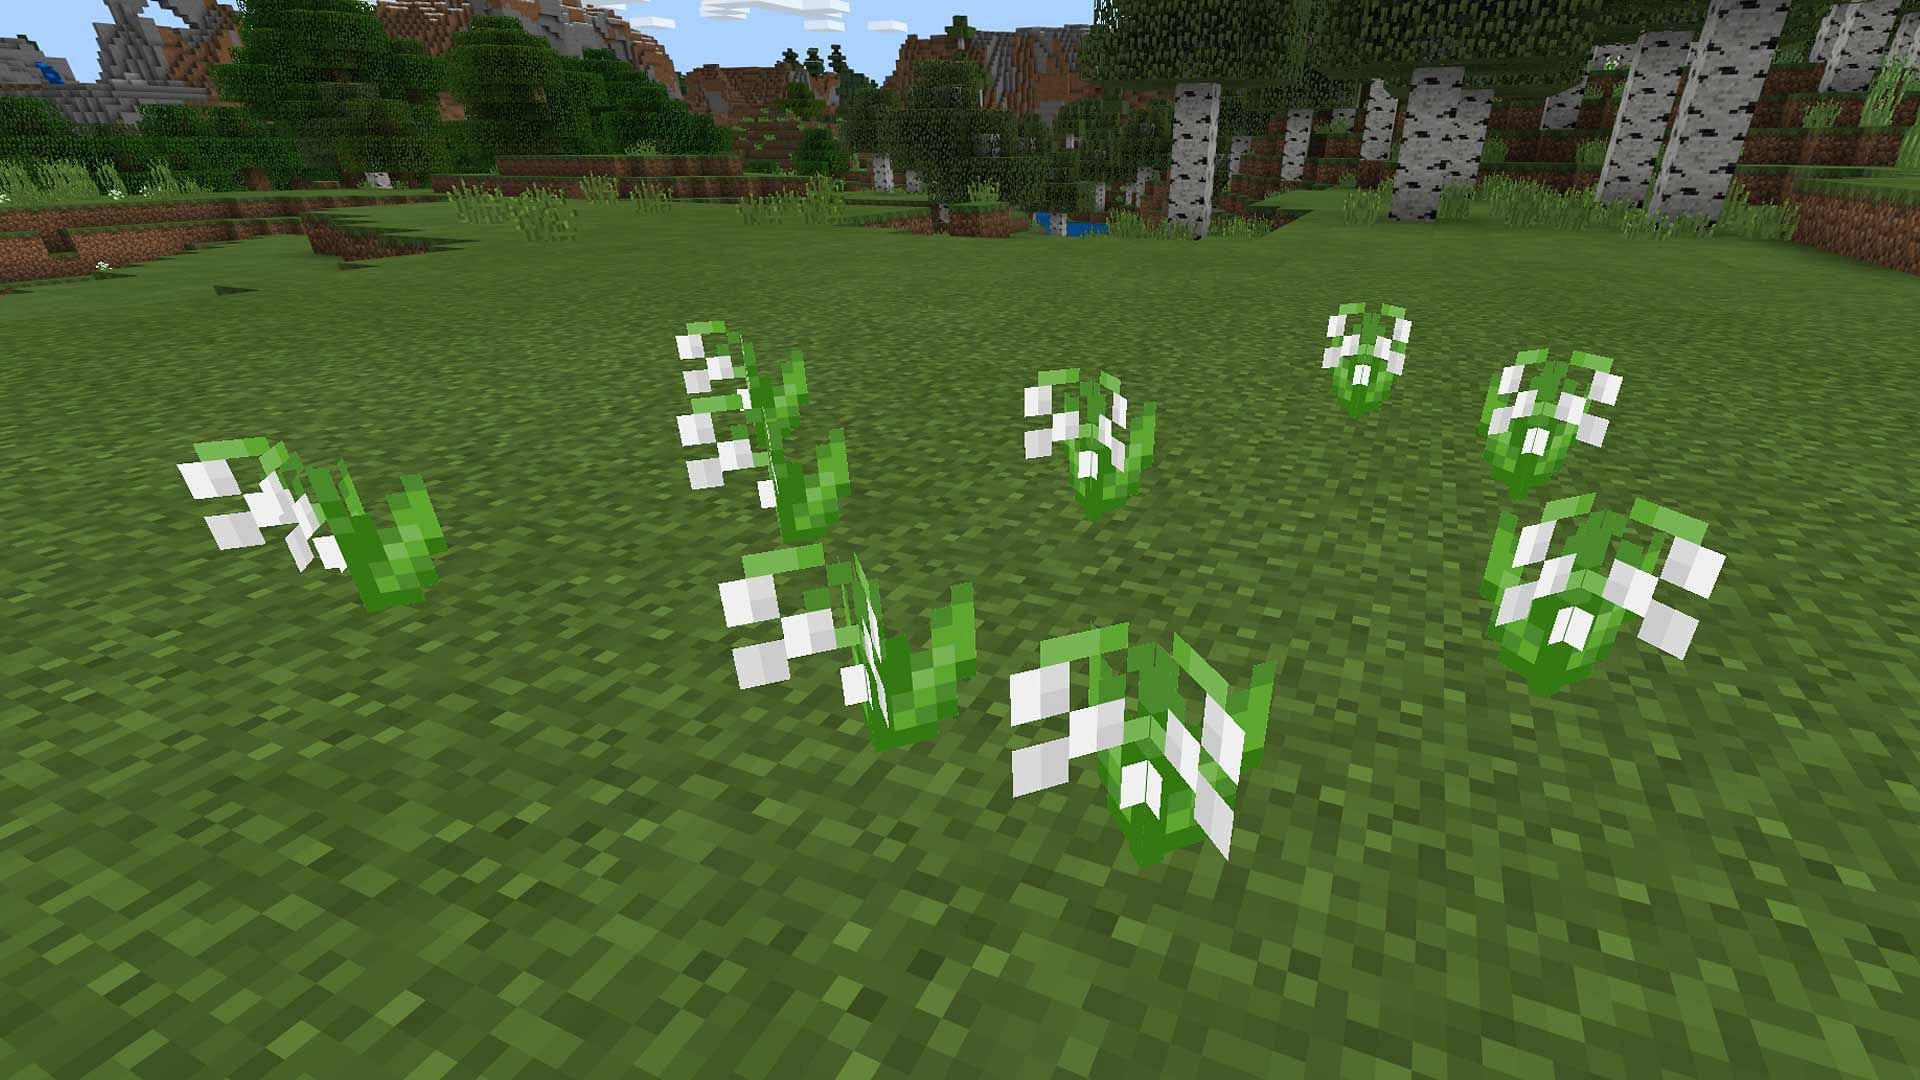 Flowers in a flower forest in Minecraft (Image via Minecraft)